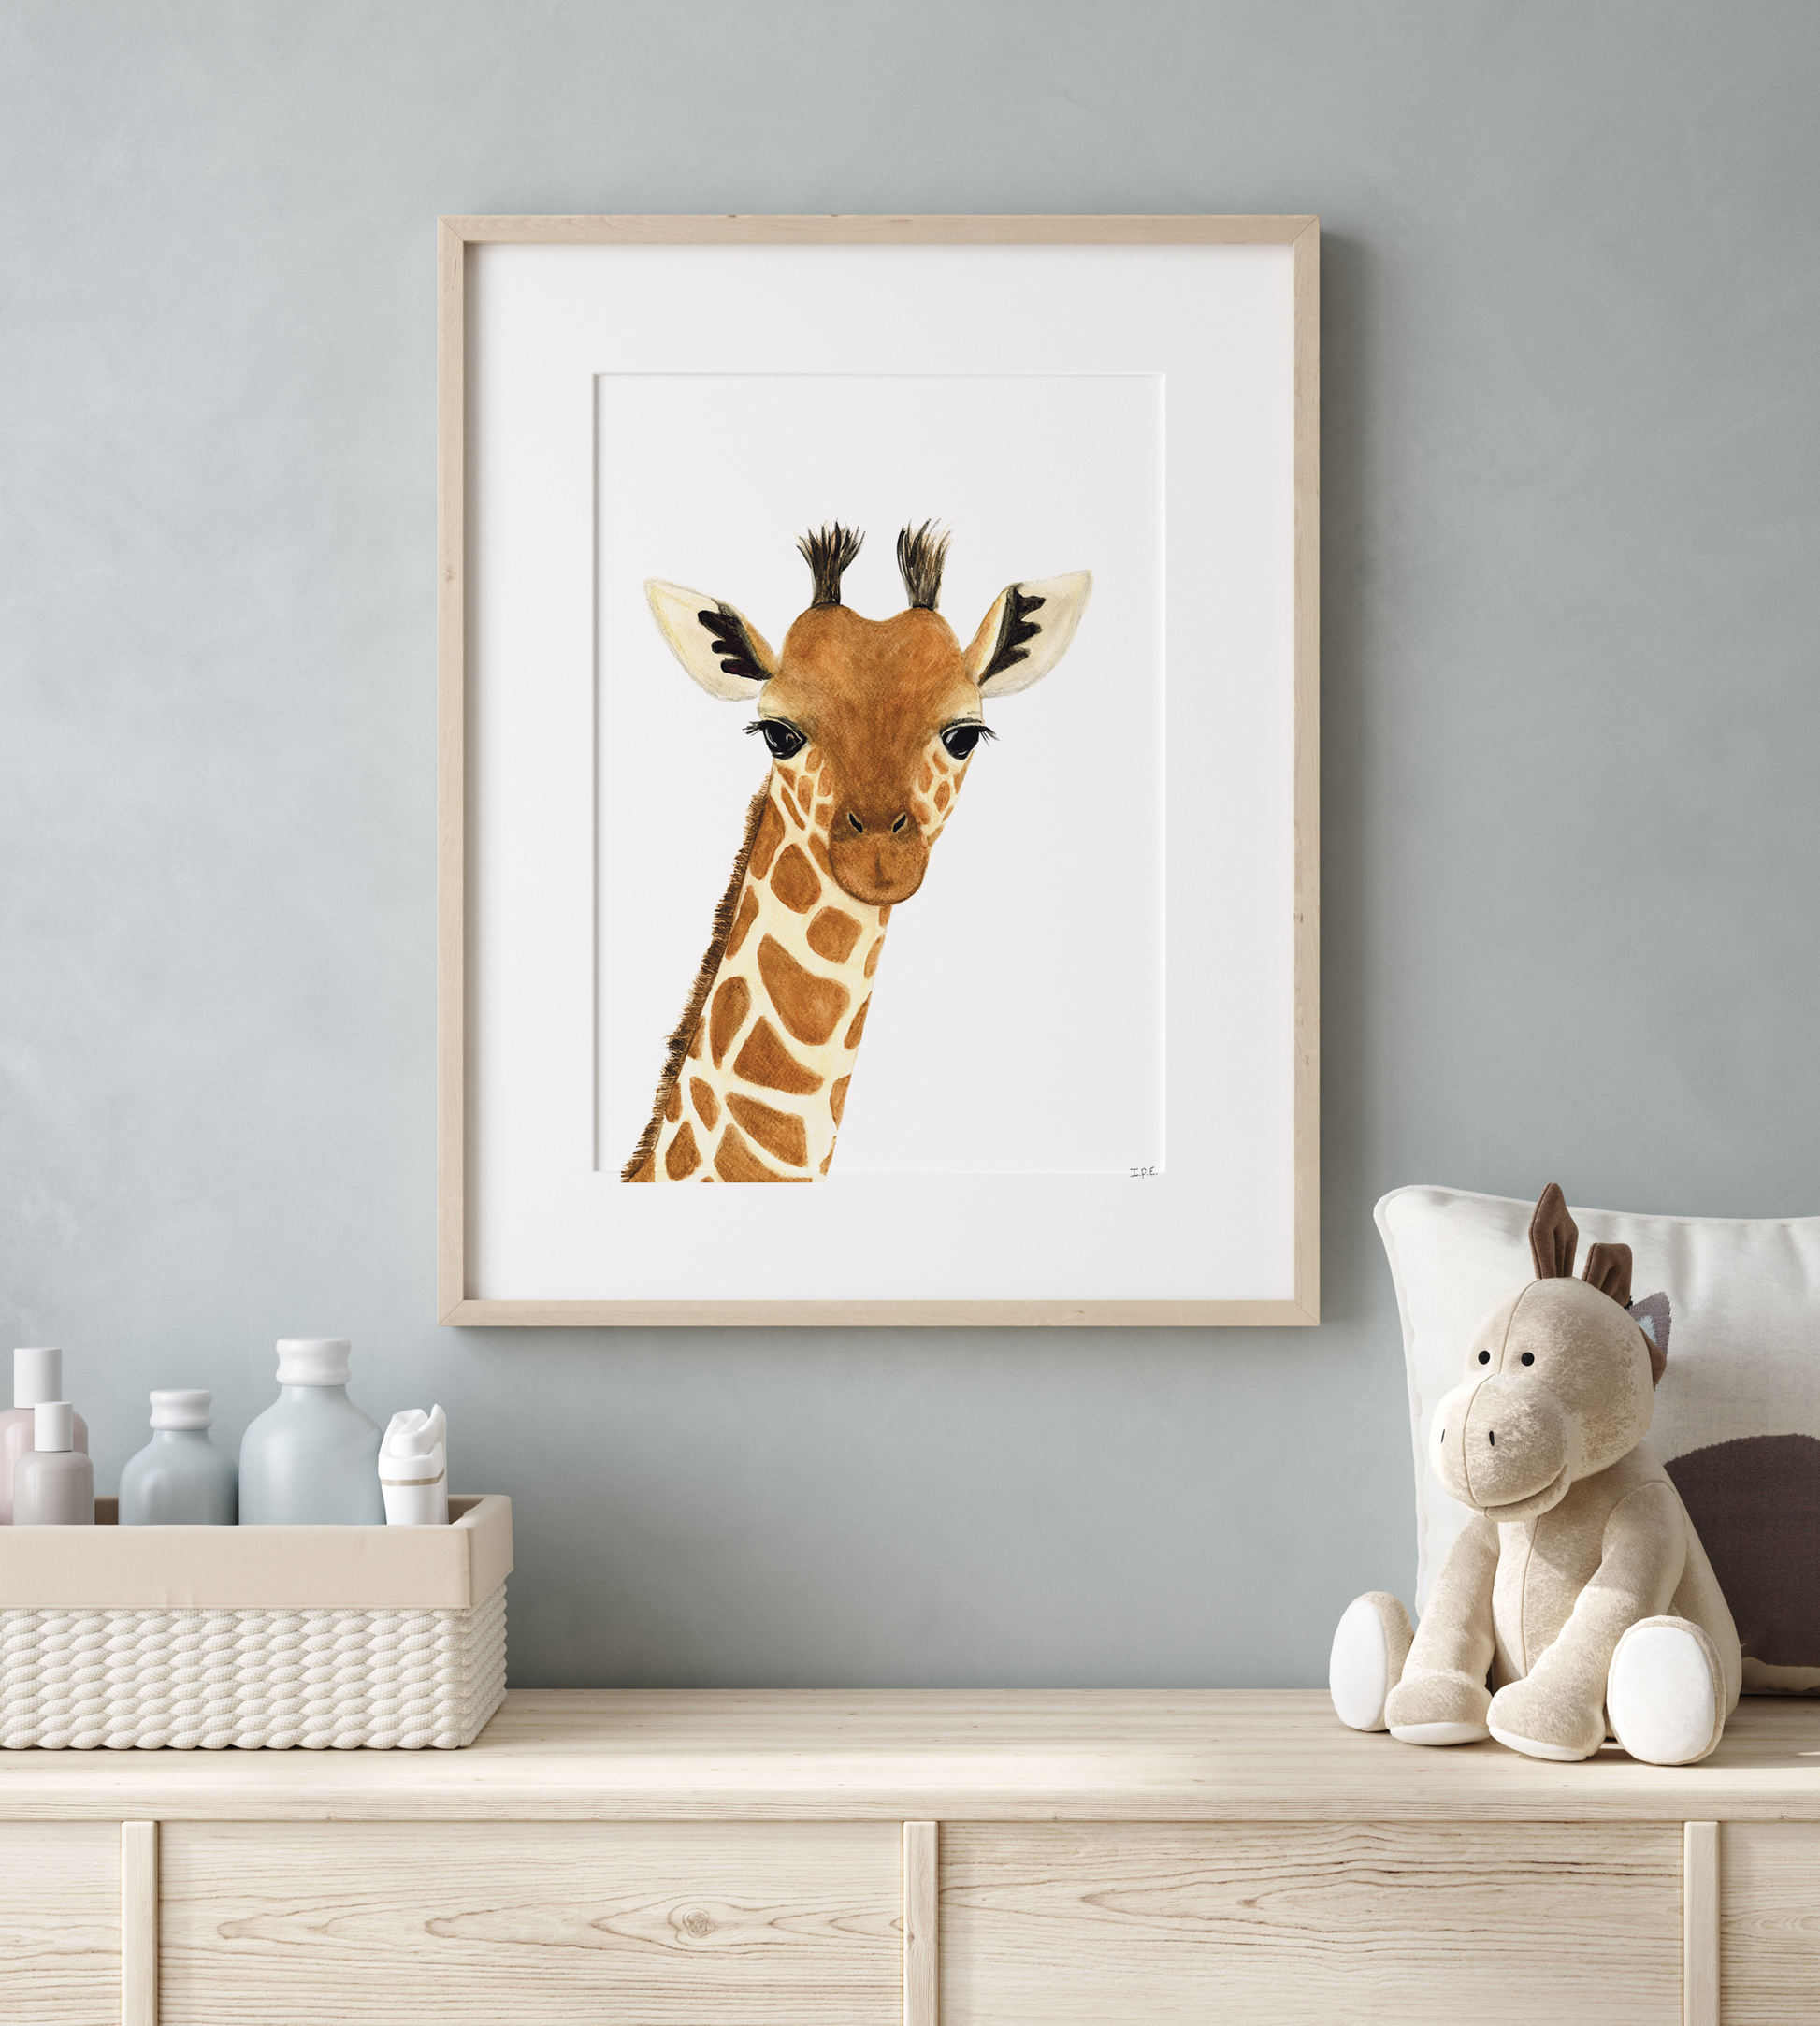 Framed Giraffe in nursery room with decor